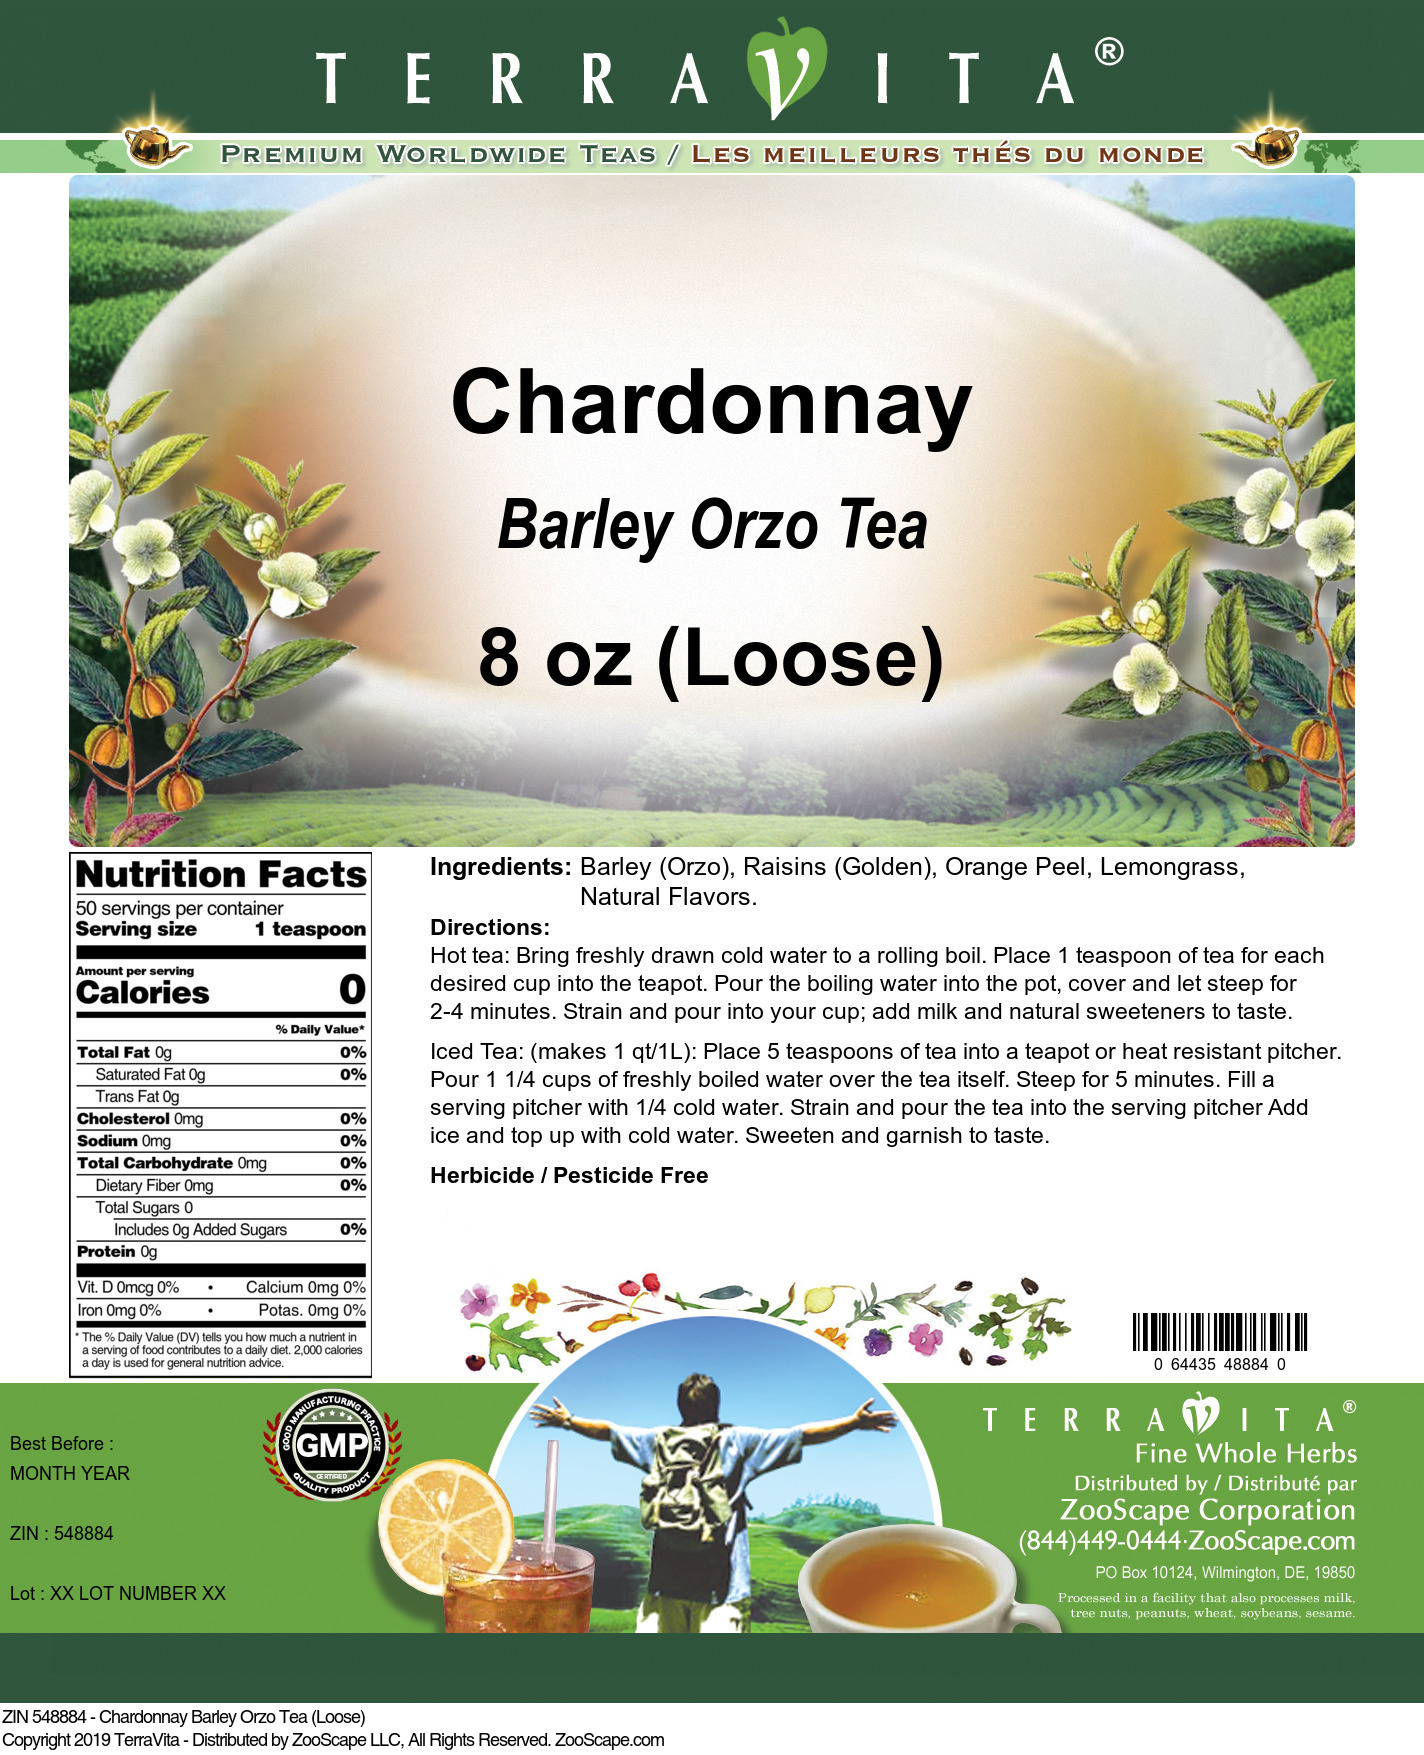 Chardonnay Barley Orzo Tea (Loose) - Label